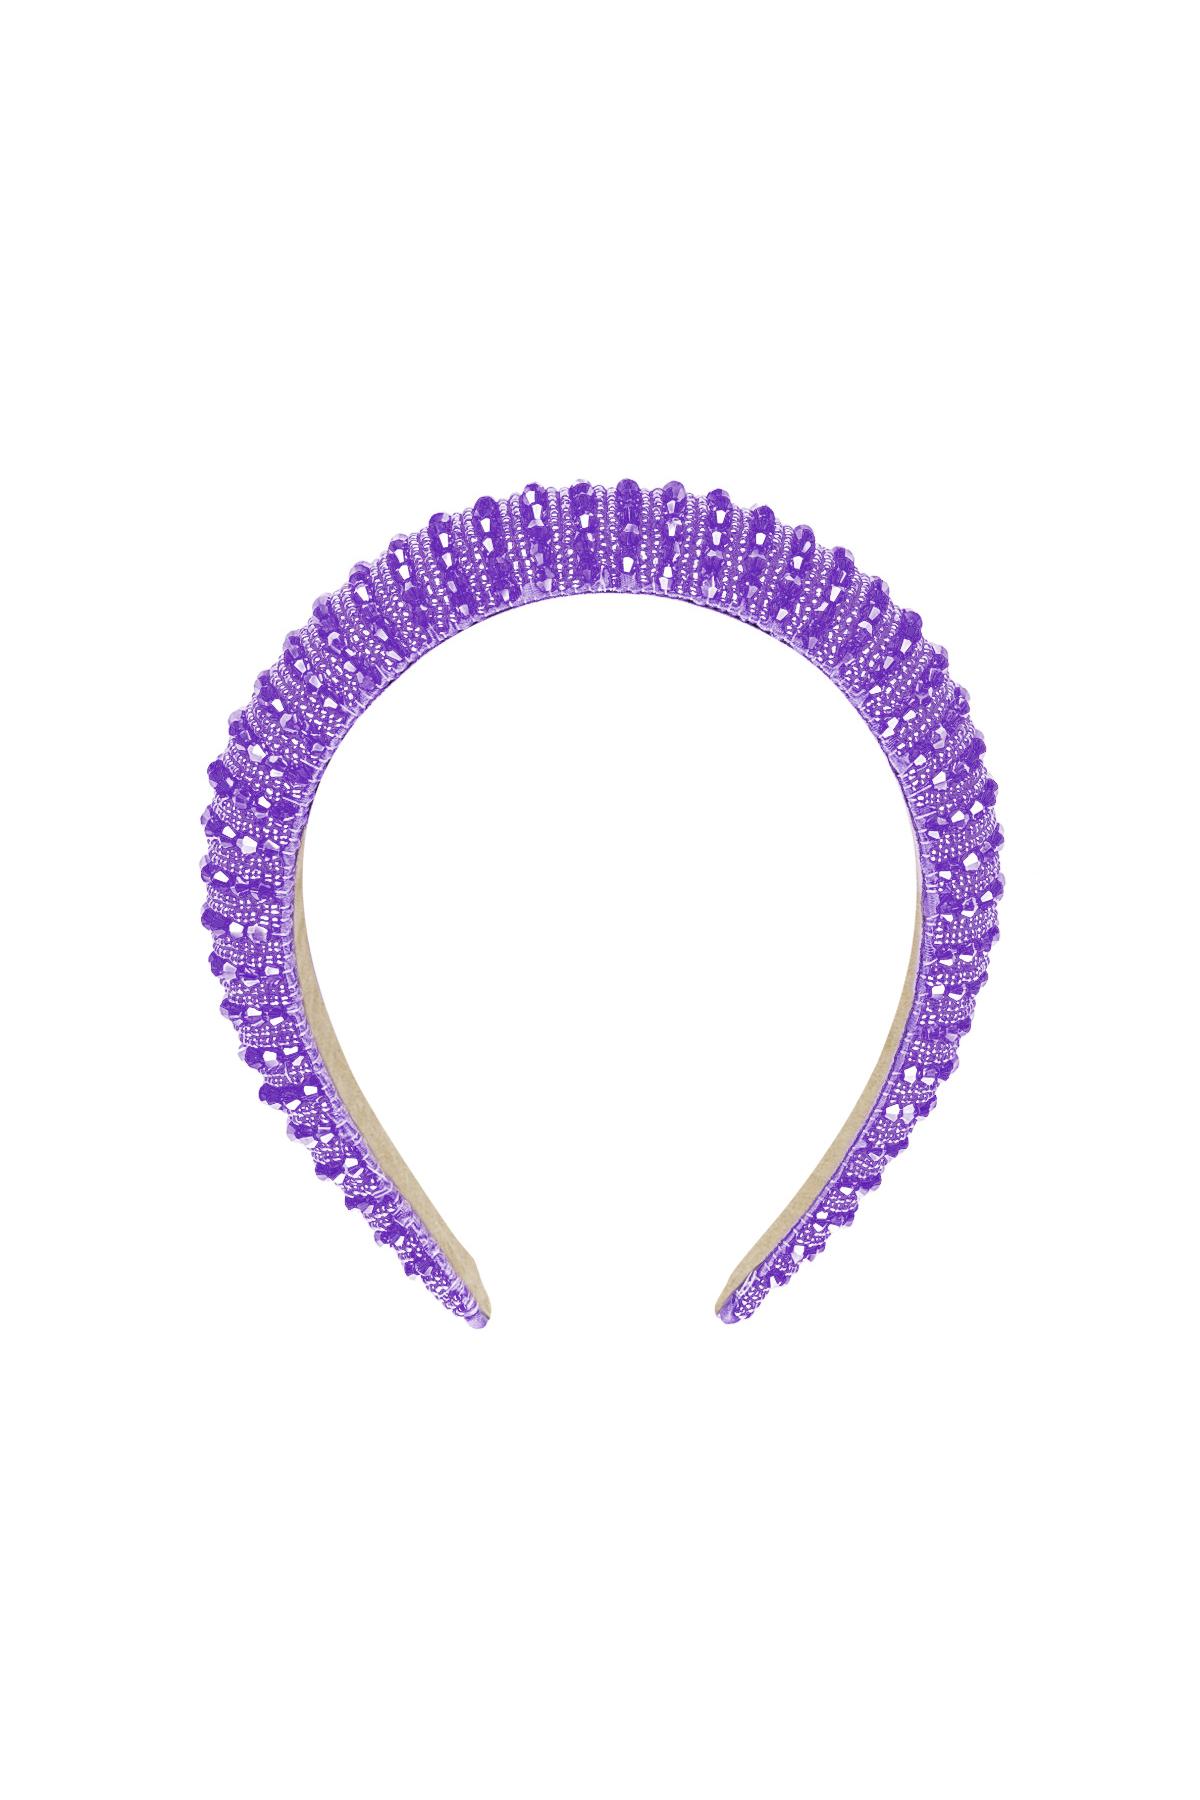 Saç bandı taşları renkli Purple Plastic h5 